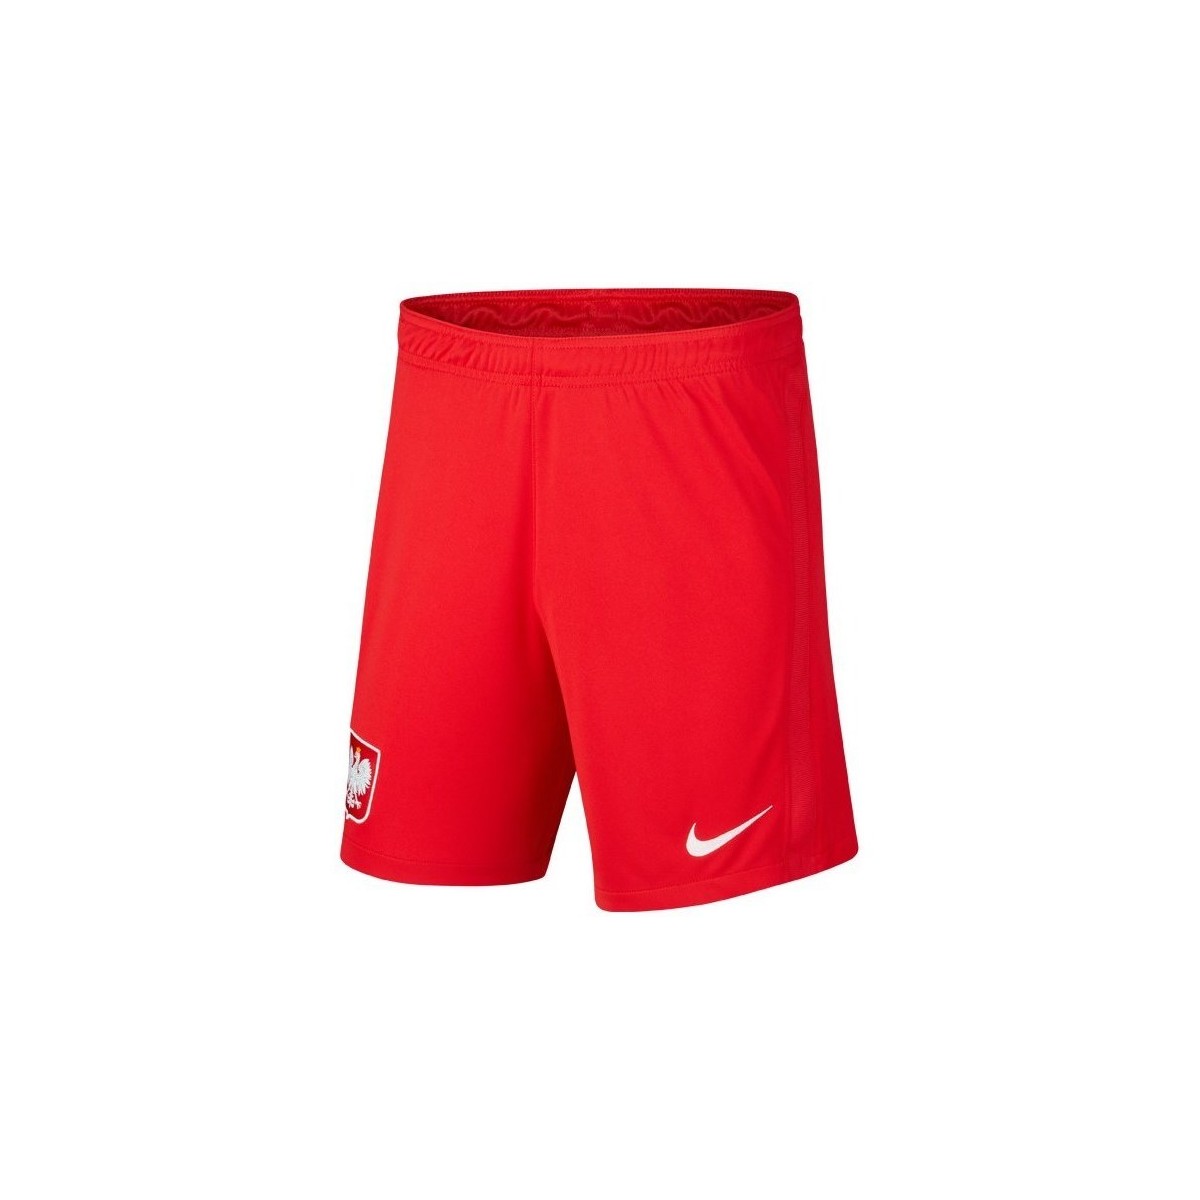 Abbigliamento Uomo Pinocchietto Nike Polska Breathe Away Rosso